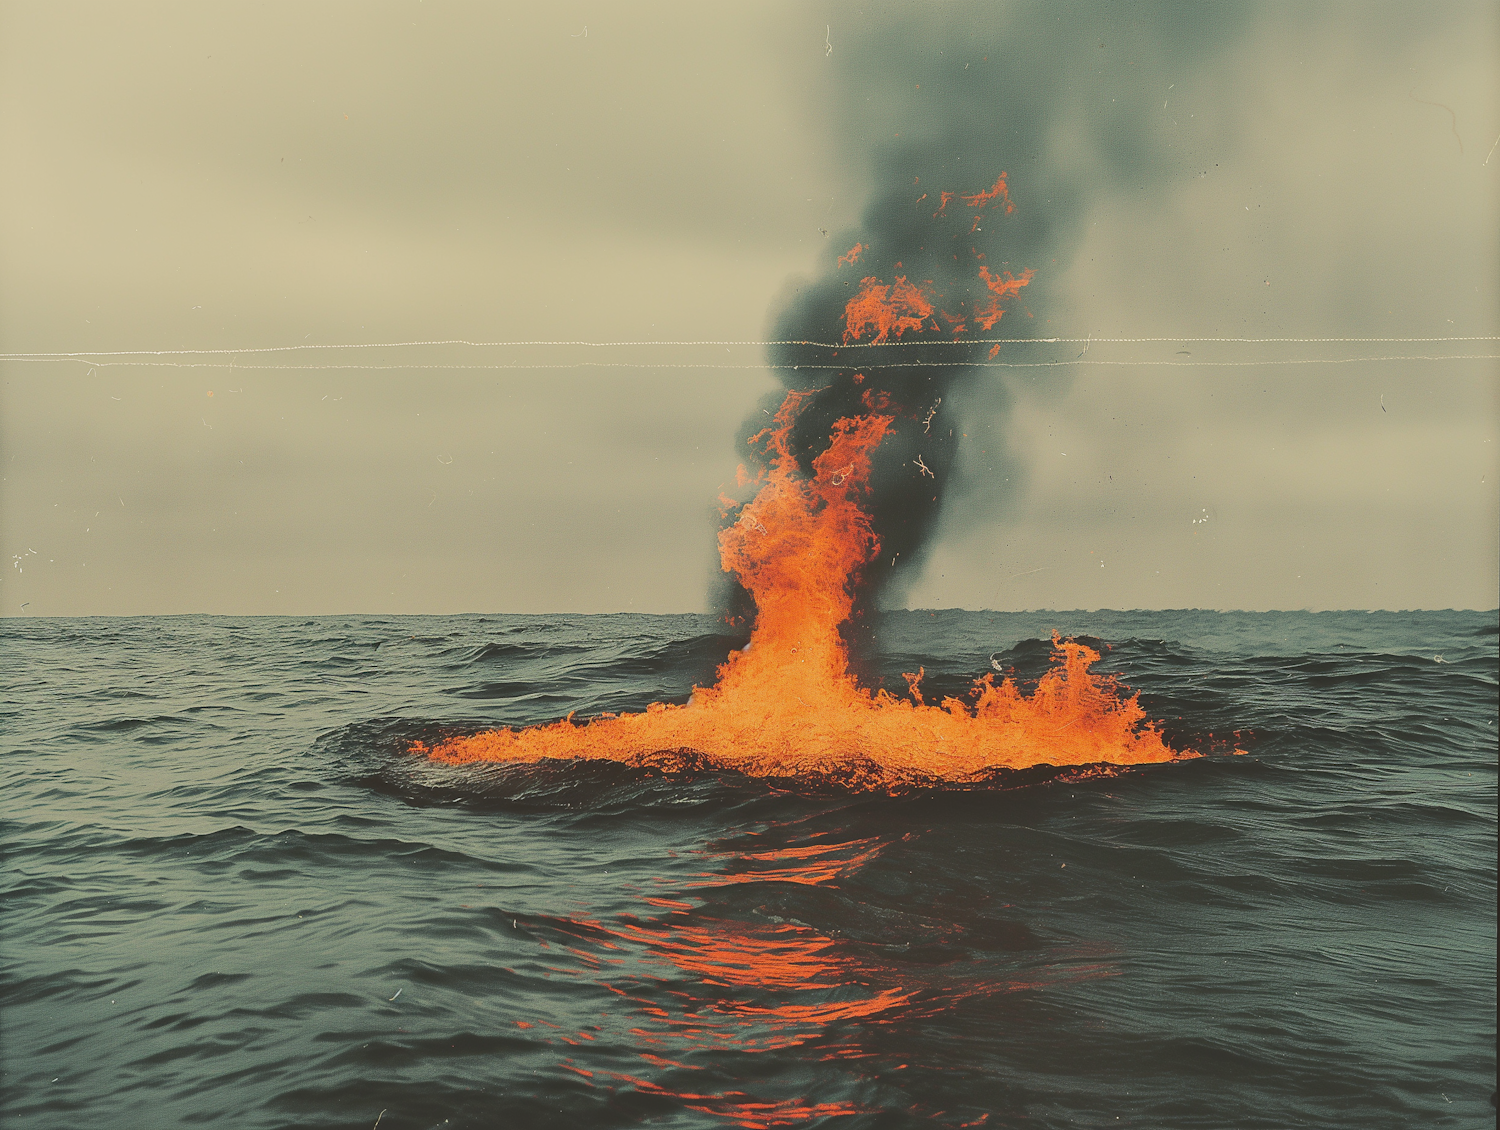 Fire in the Sea